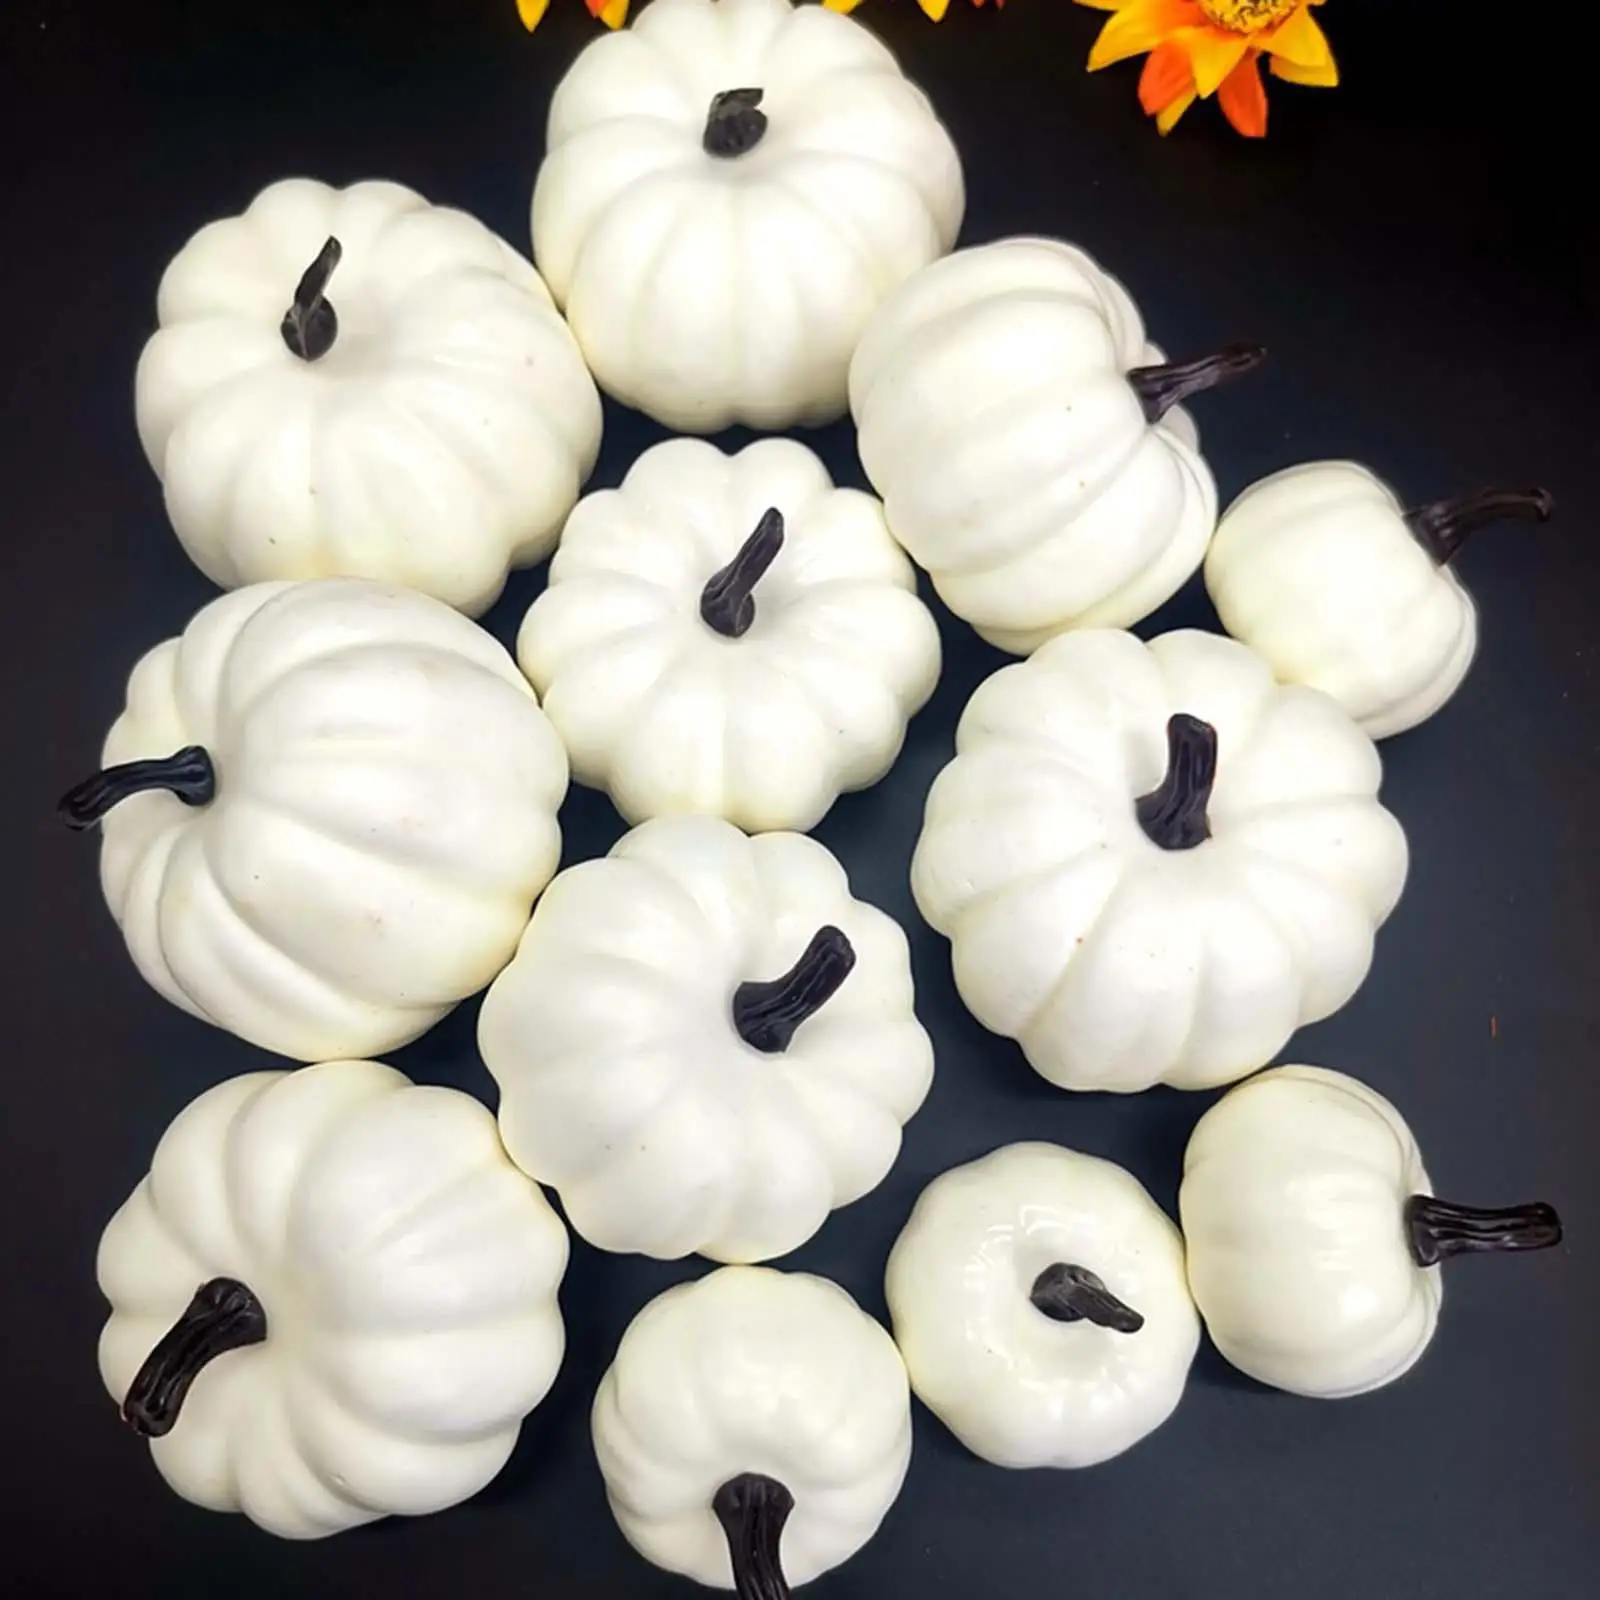 12x Fake Pumpkins Model Rustic Foam Harvest Decorative Artificial Vegetables for Halloween Thanksgiving Fireplace Wedding Fall